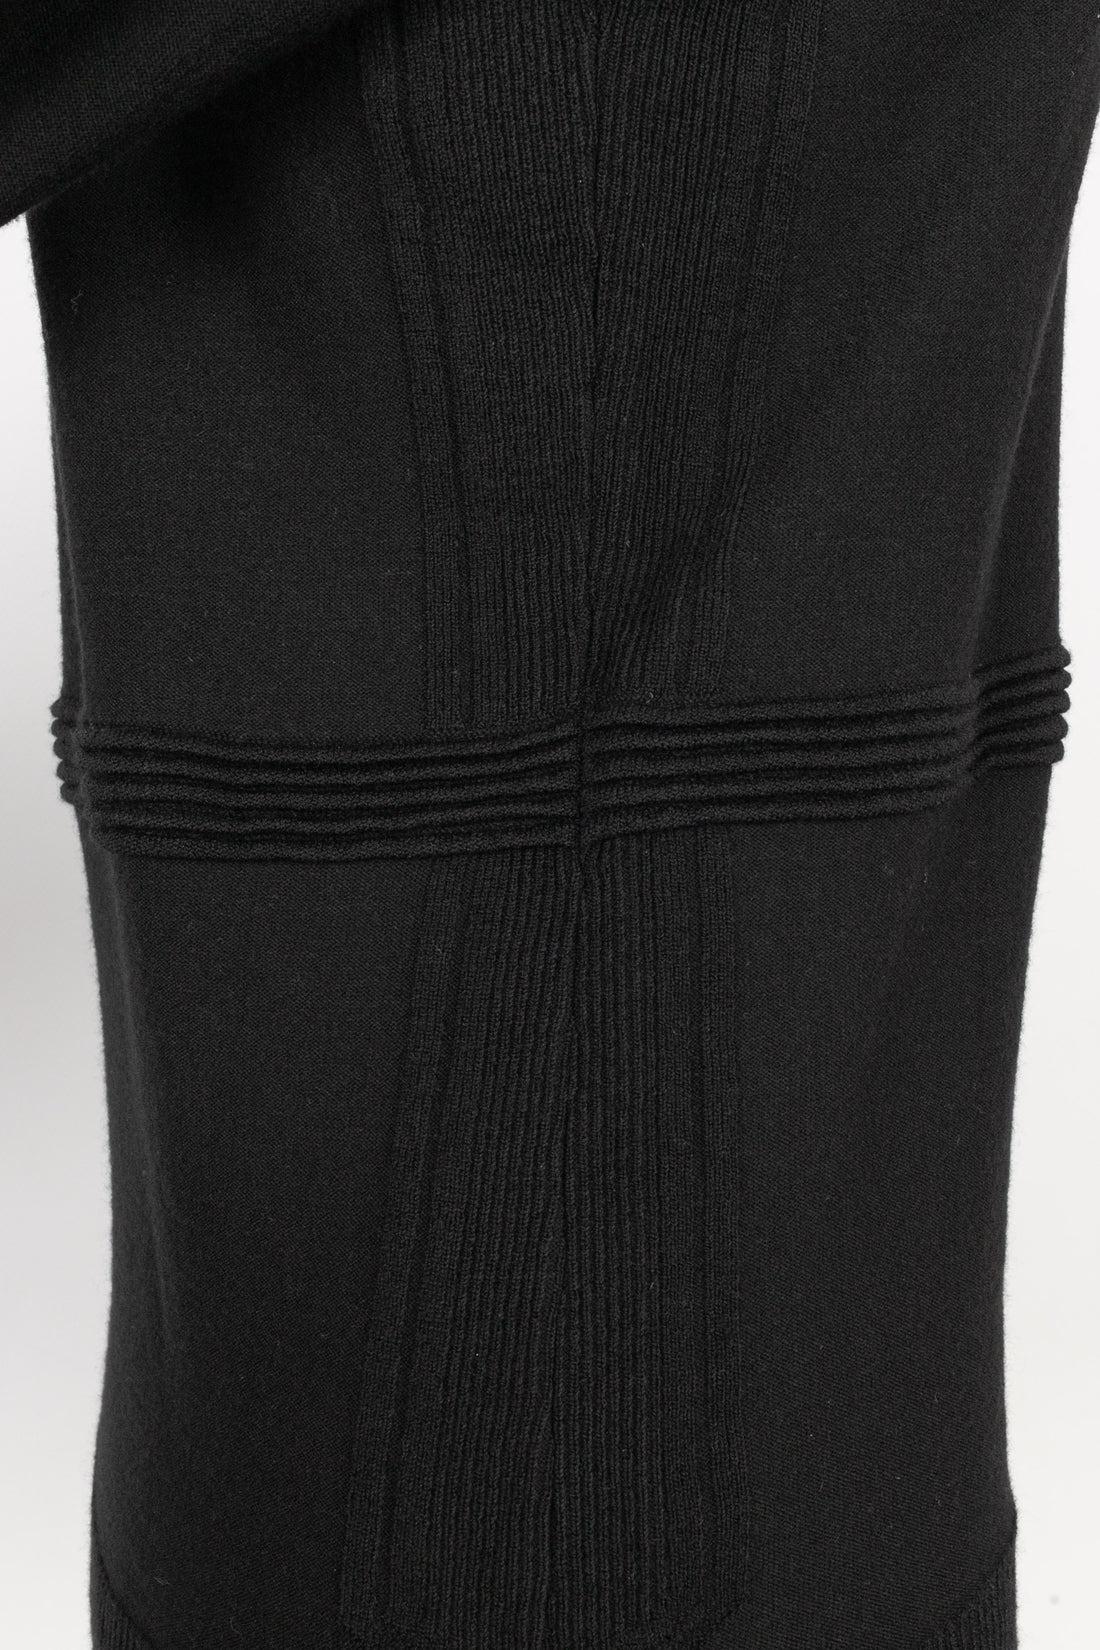 Chanel Black Pullover in Black Wool Turtleneck  For Sale 2